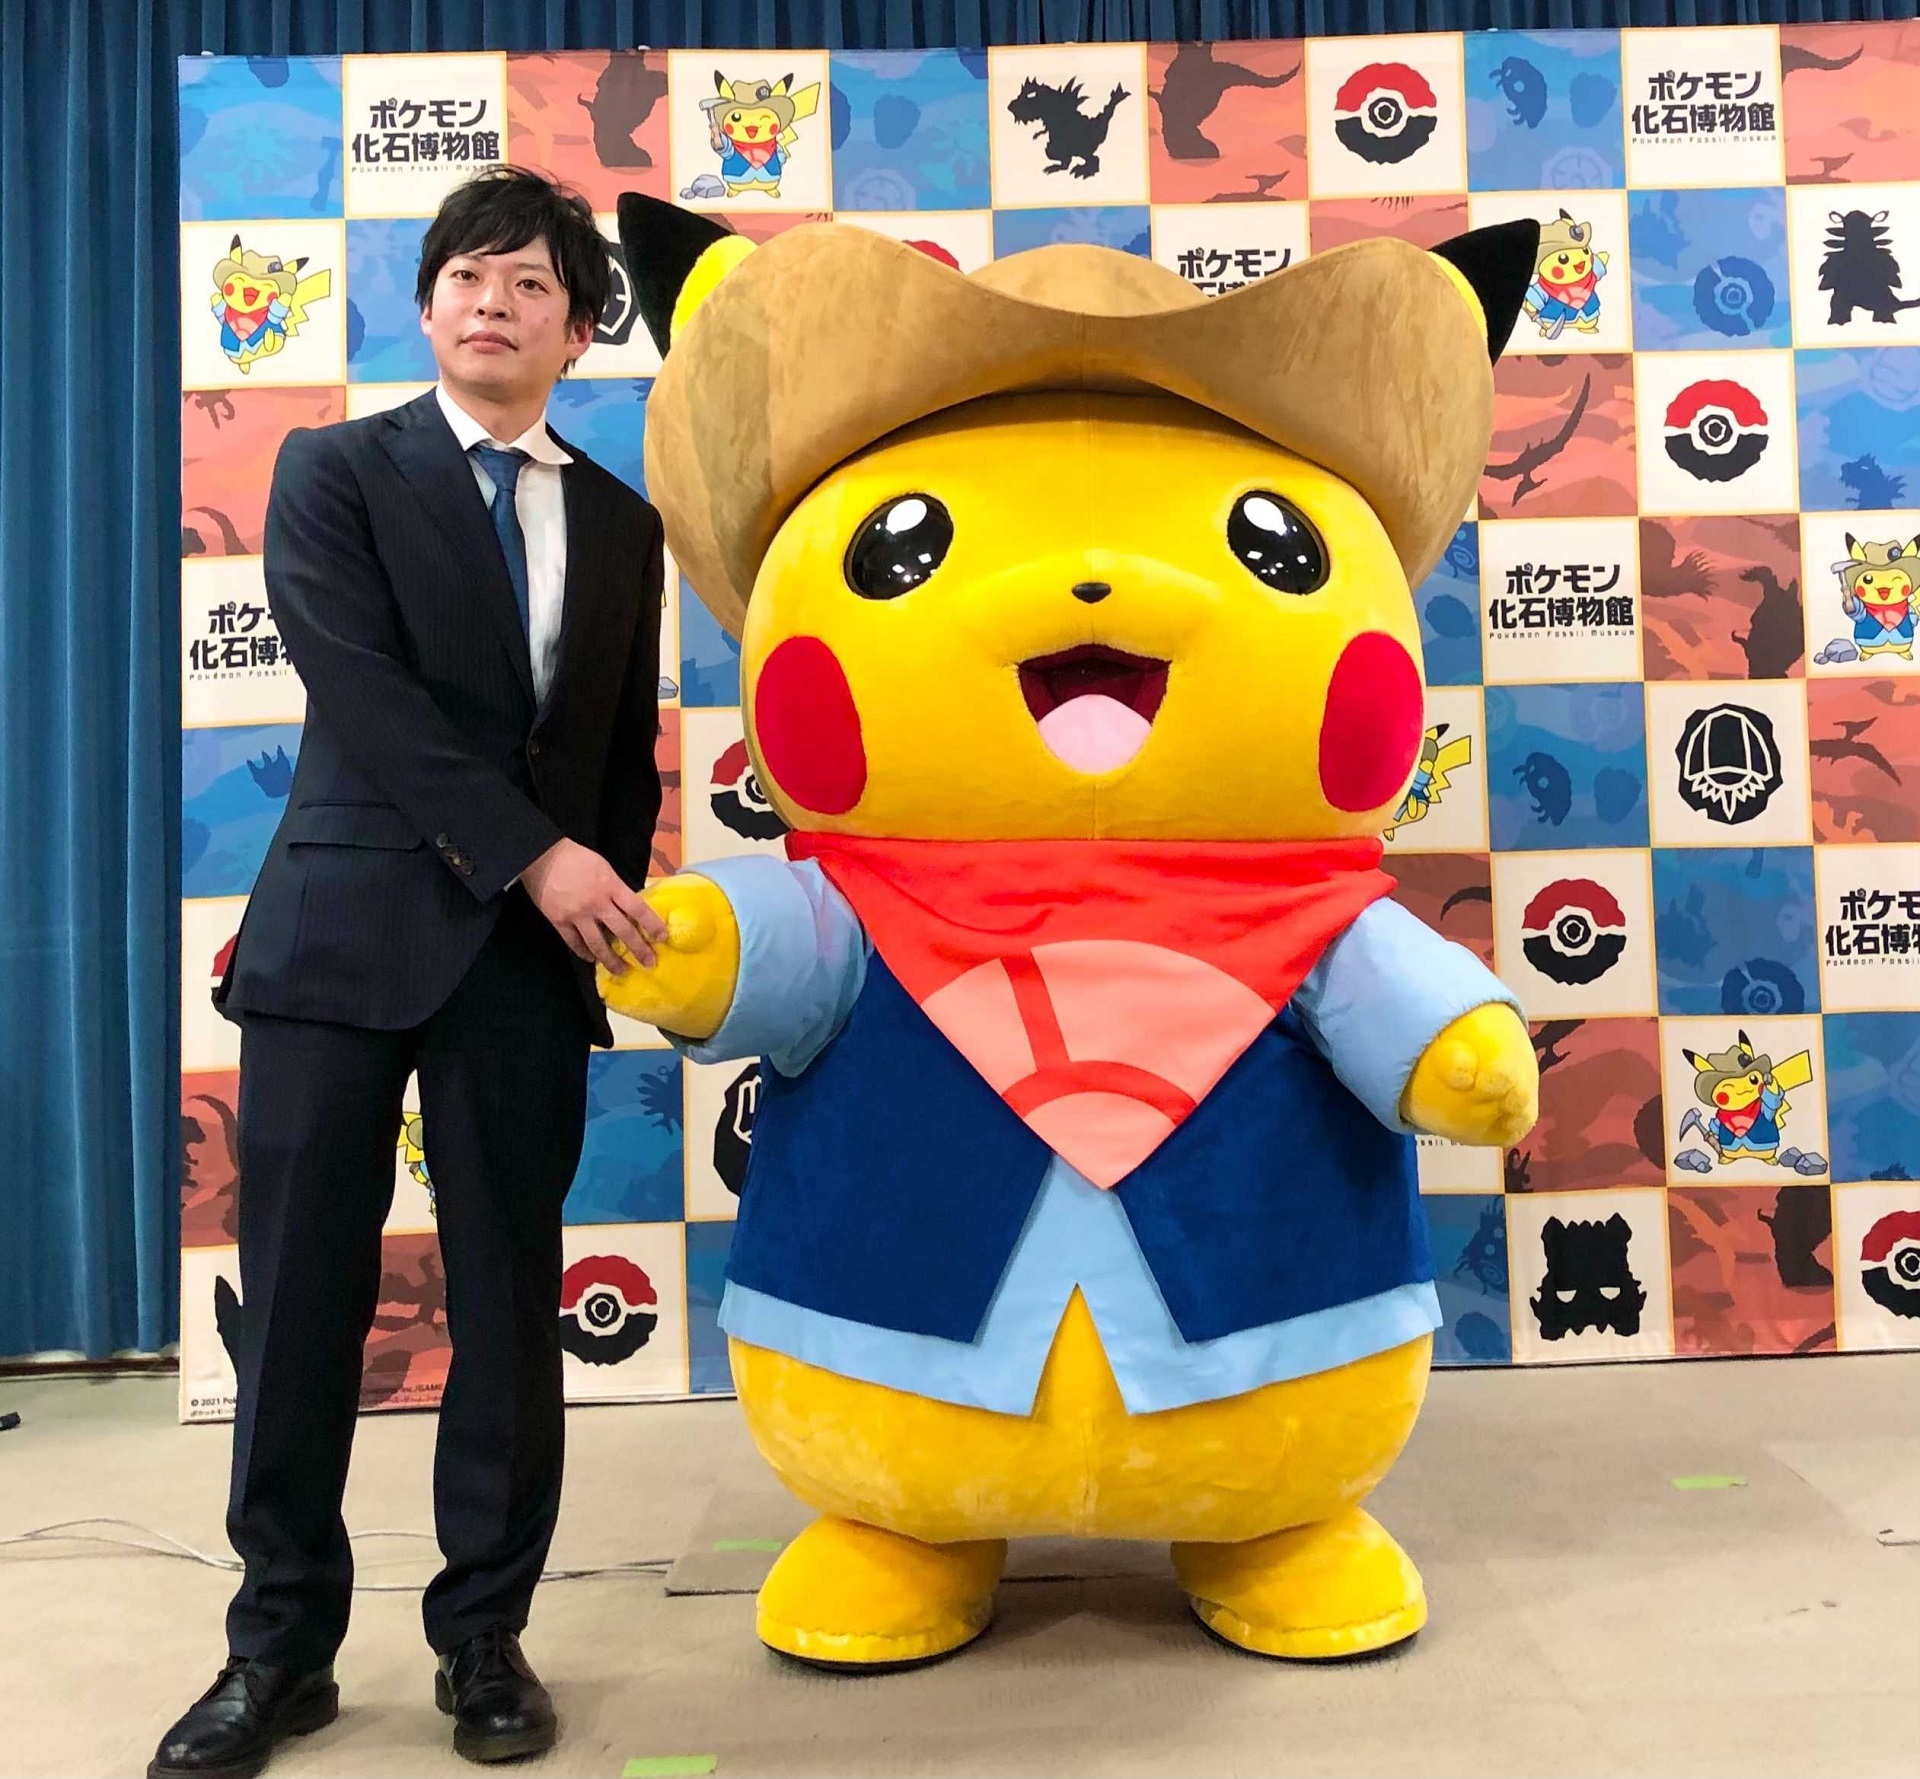 How Pikachu Became Pokémon's Mascot